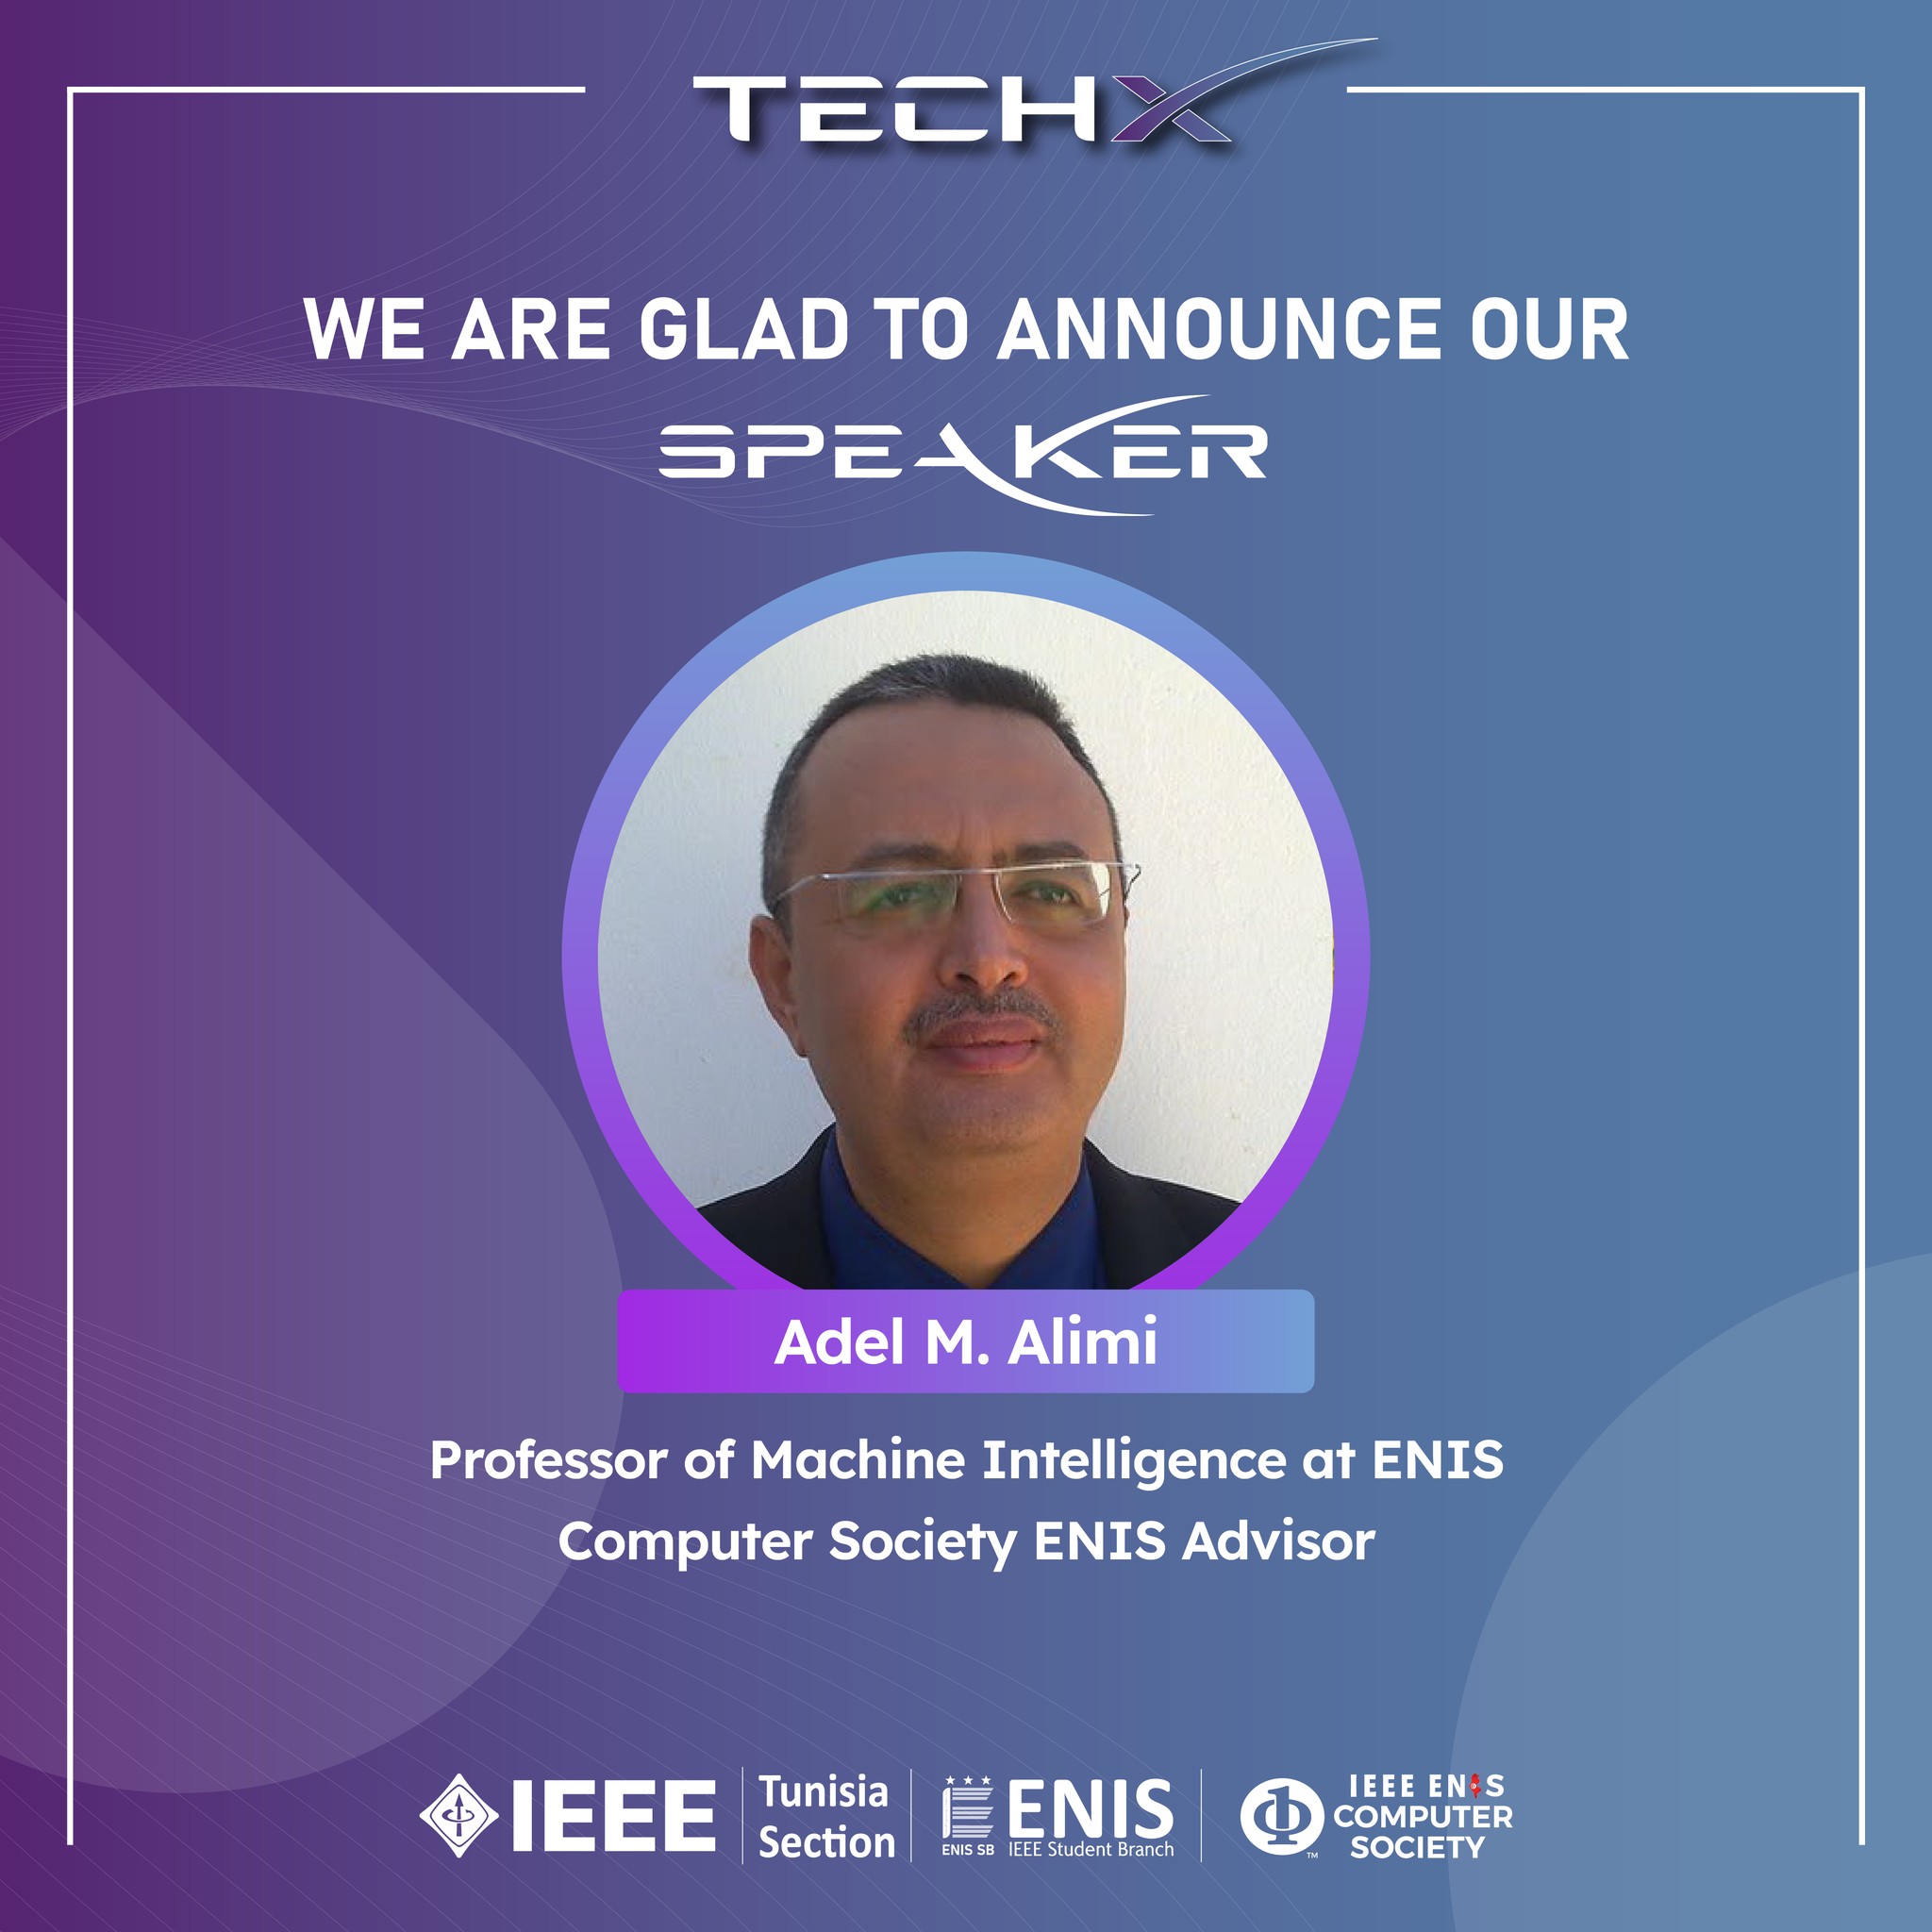 TechX IEEE Tunisia Section CS event